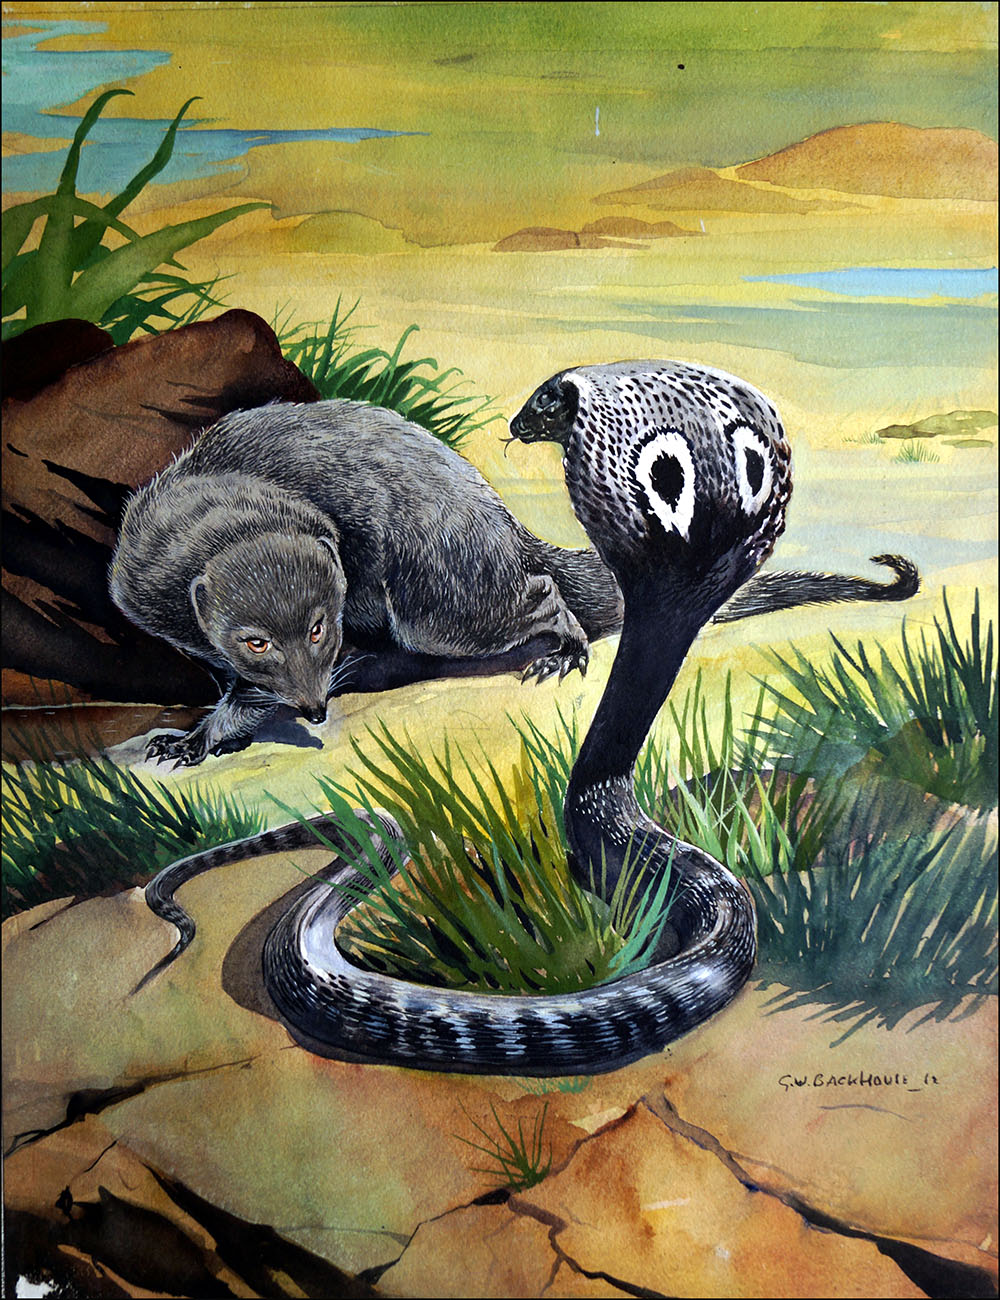 Mongoose Versus Cobra (Original) (Signed) art by G W Backhouse Art at The Illustration Art Gallery